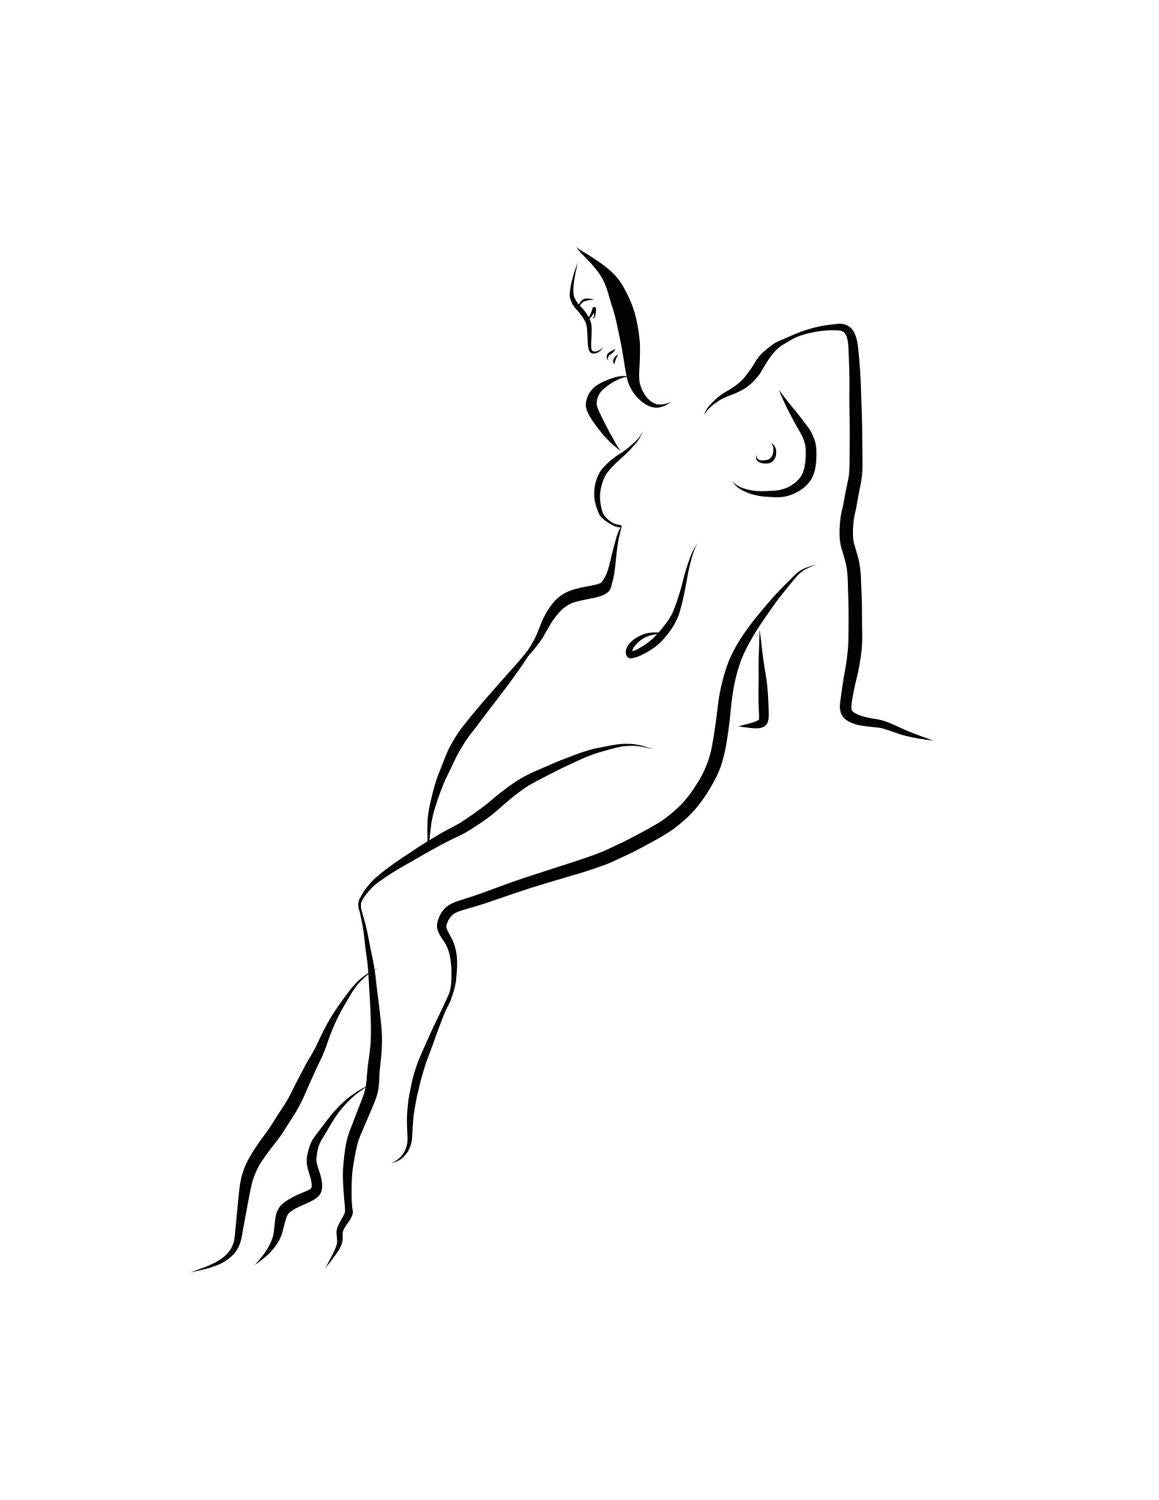 Nude Print Michael Binkley - Haiku n°25, 1/50 - dessin numérique d'une figure de femme nue allongée